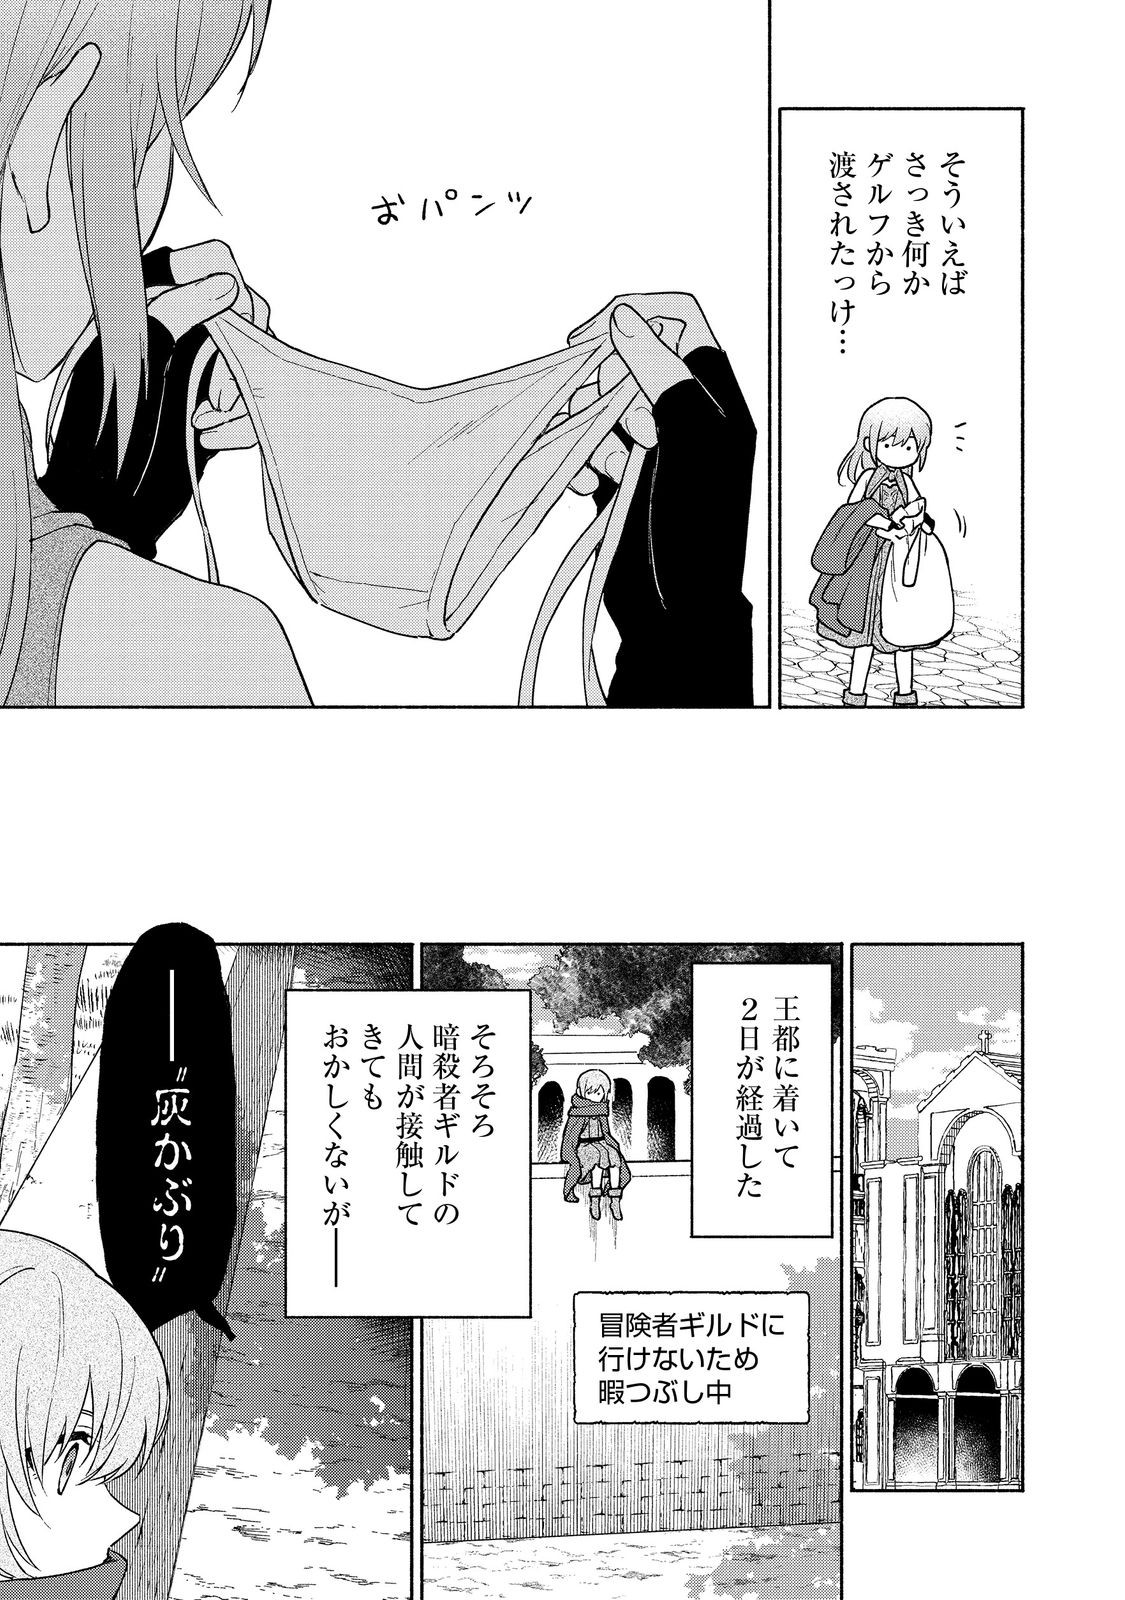 Otome Game no Heroine de Saikyou Survival - Chapter 22 - Page 23